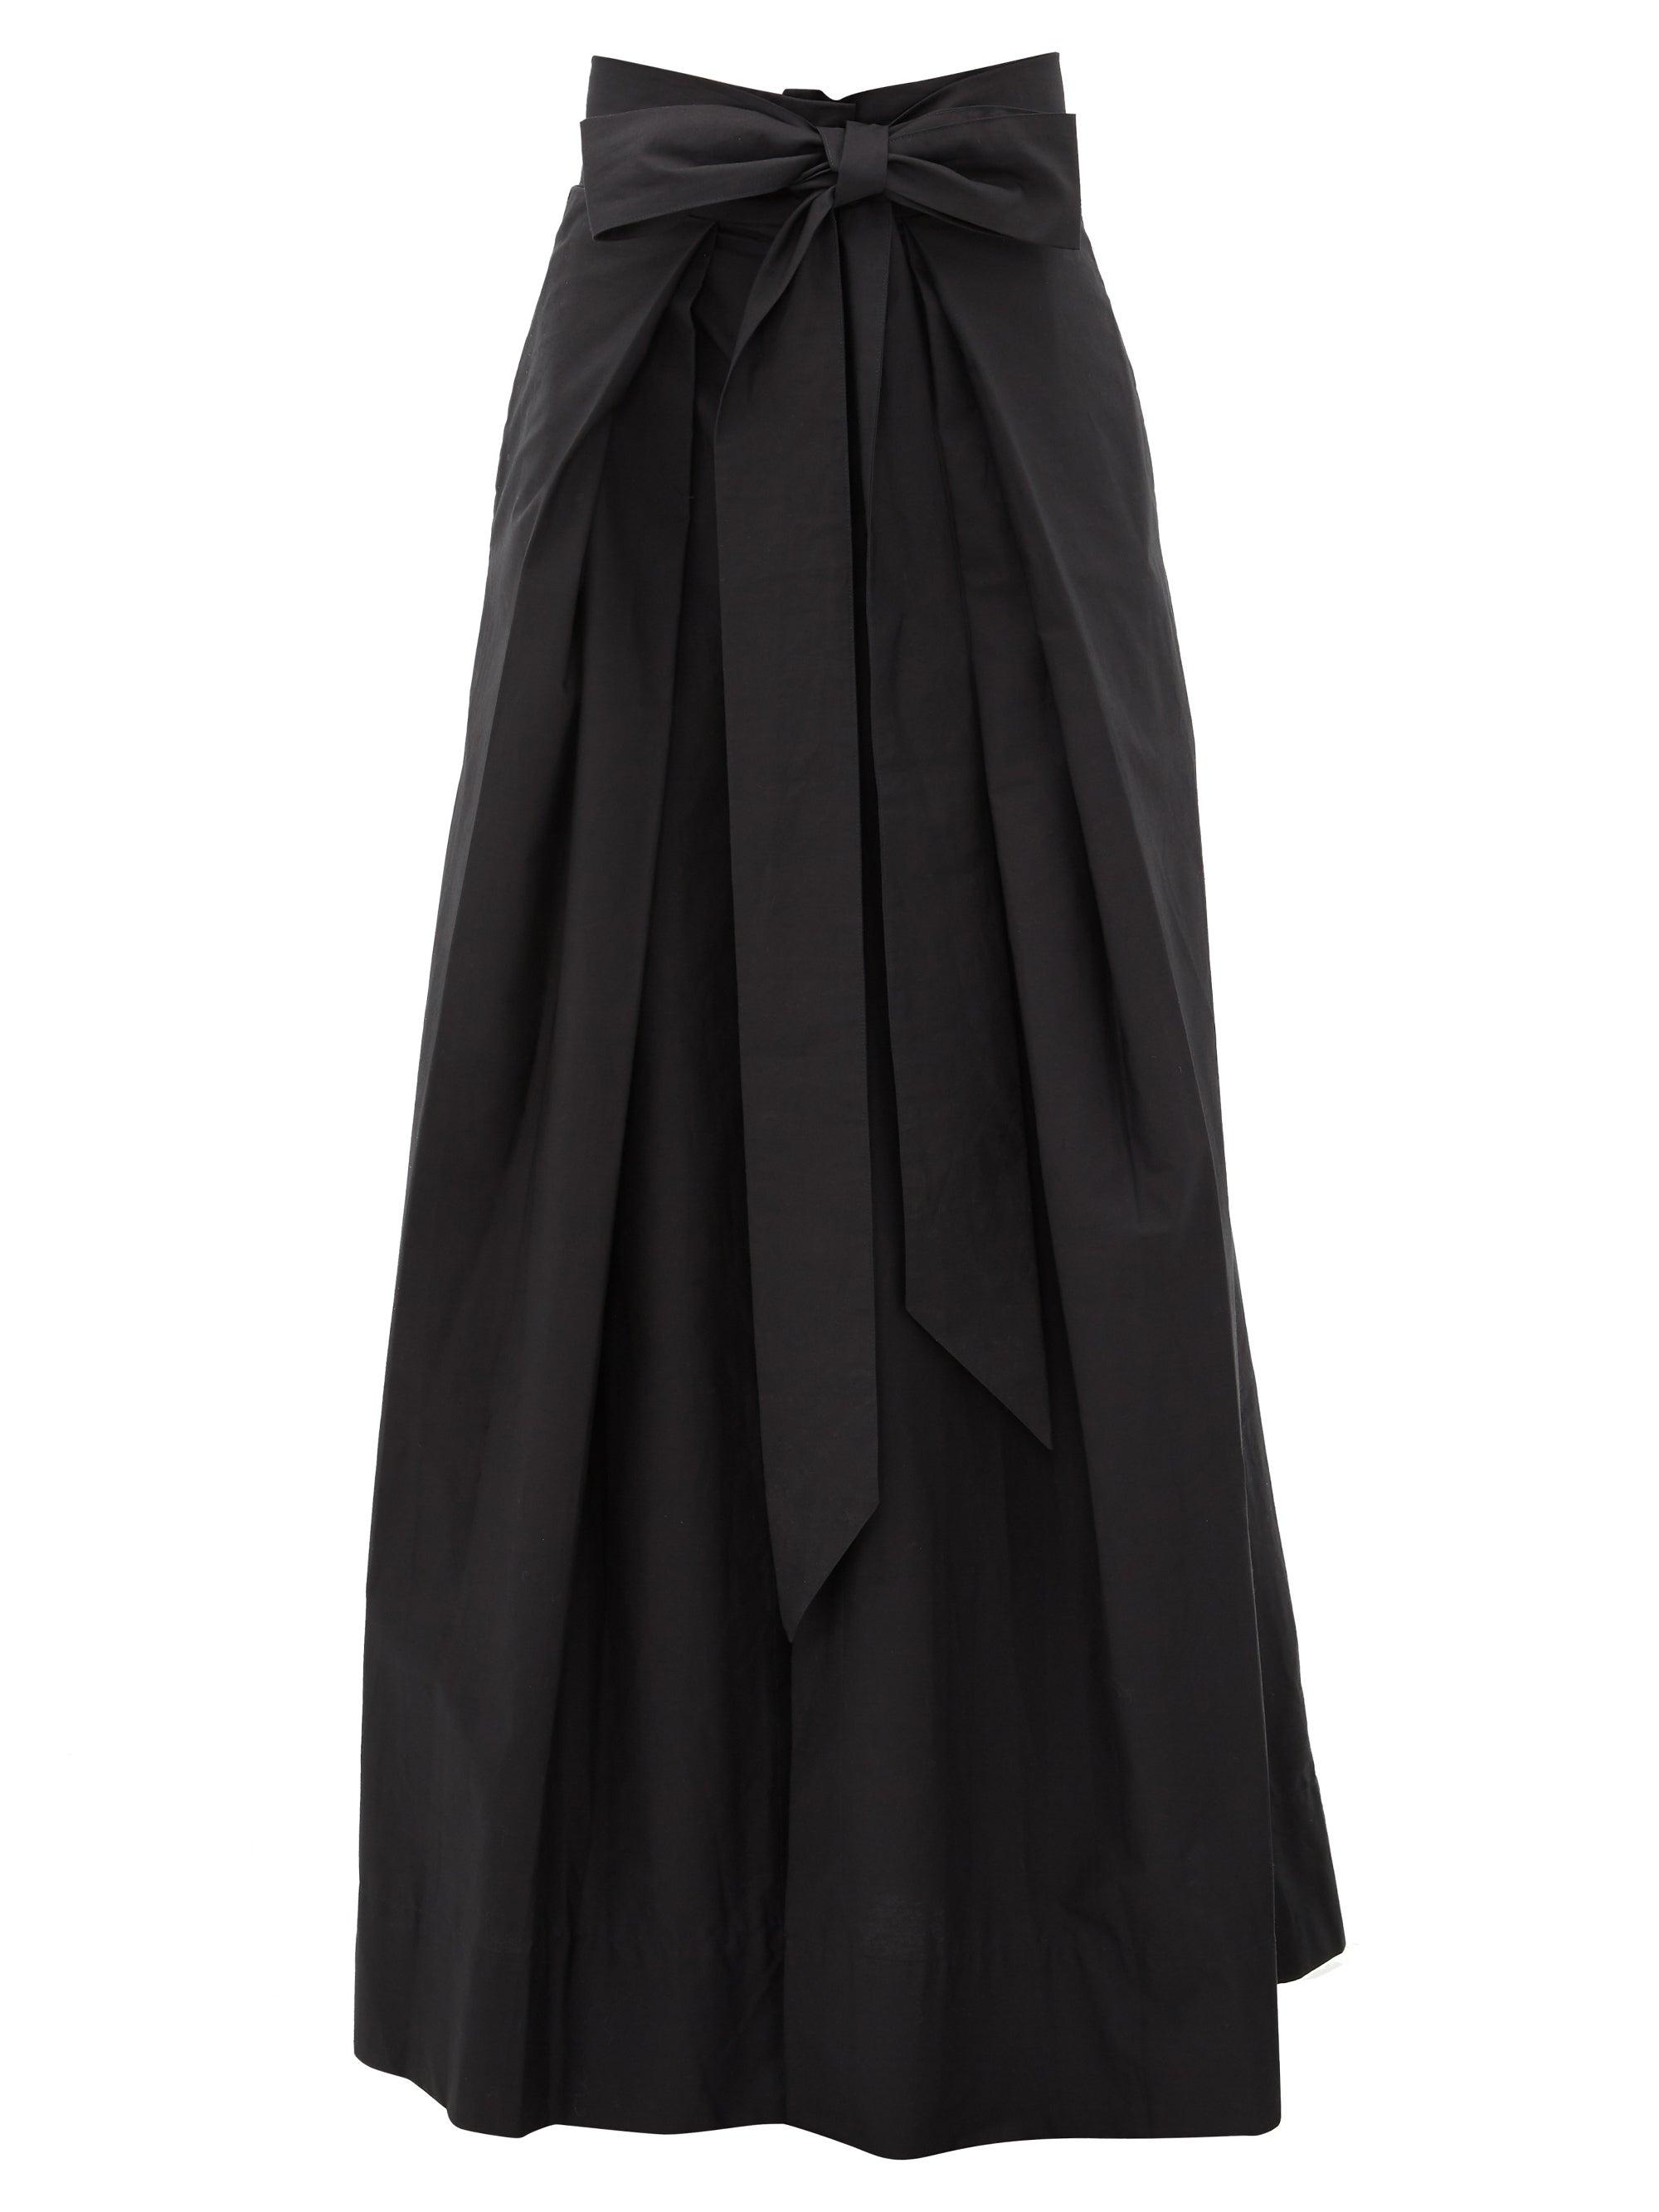 Kalita Avendon Tie-waist Cotton Maxi Skirt in Black - Lyst